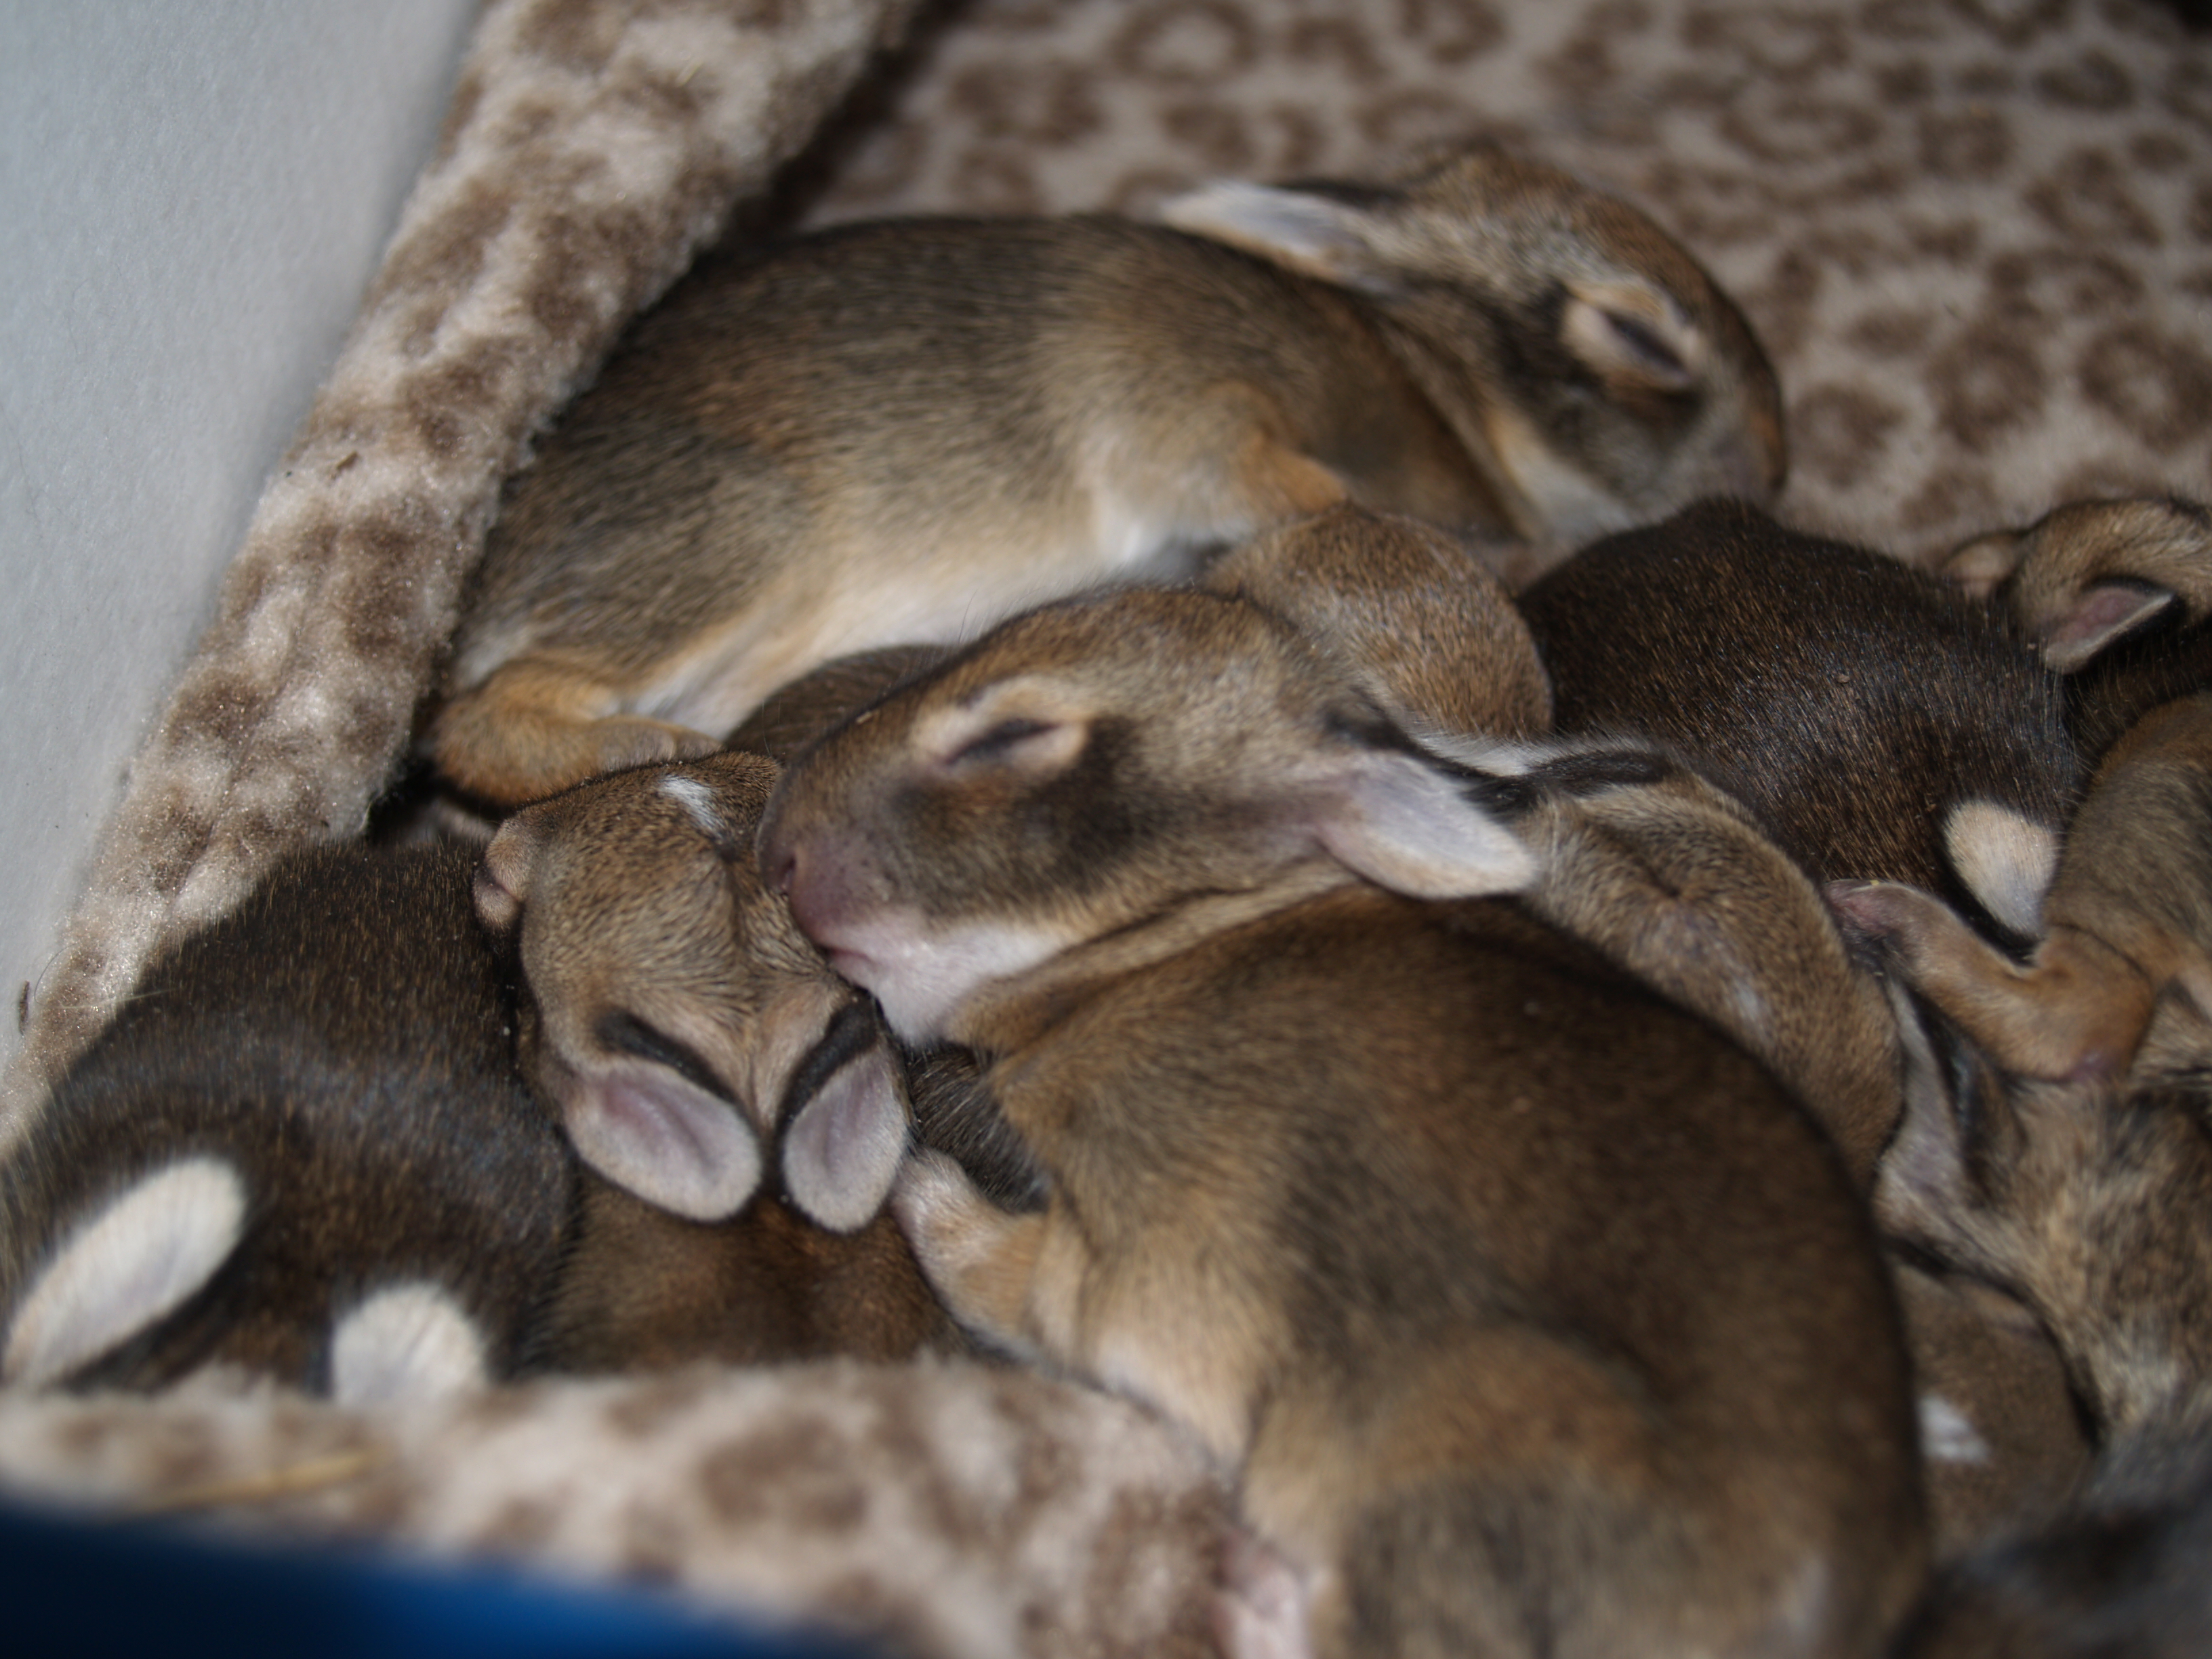 How to Identify Orphaned Rabbits - Ontario SPCA and Humane Society